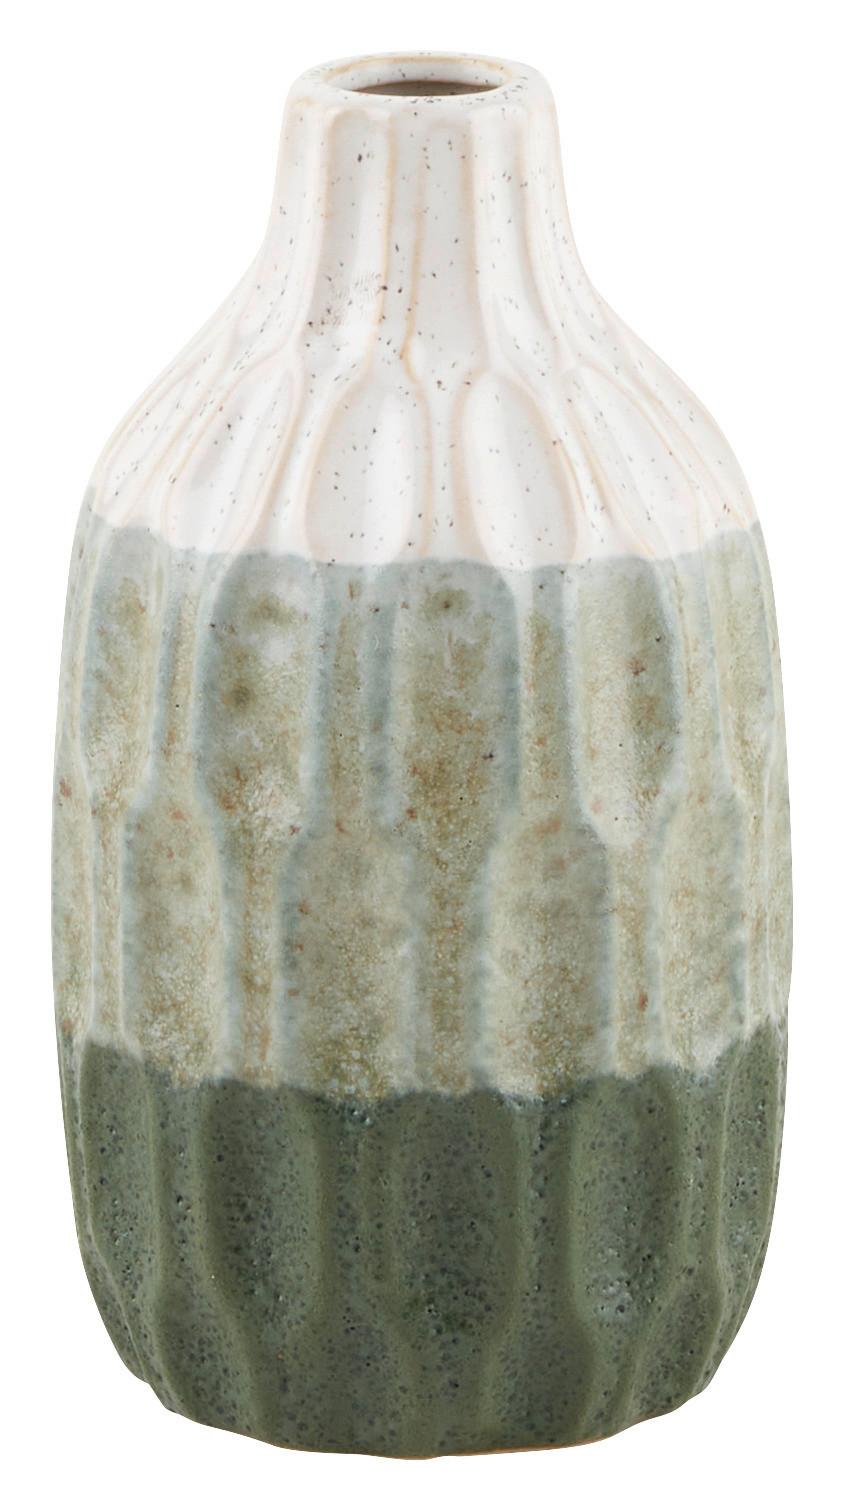 Vaza Inma I -Paz- - krem barve/zelena, Basics, keramika (12/21cm) - Premium Living